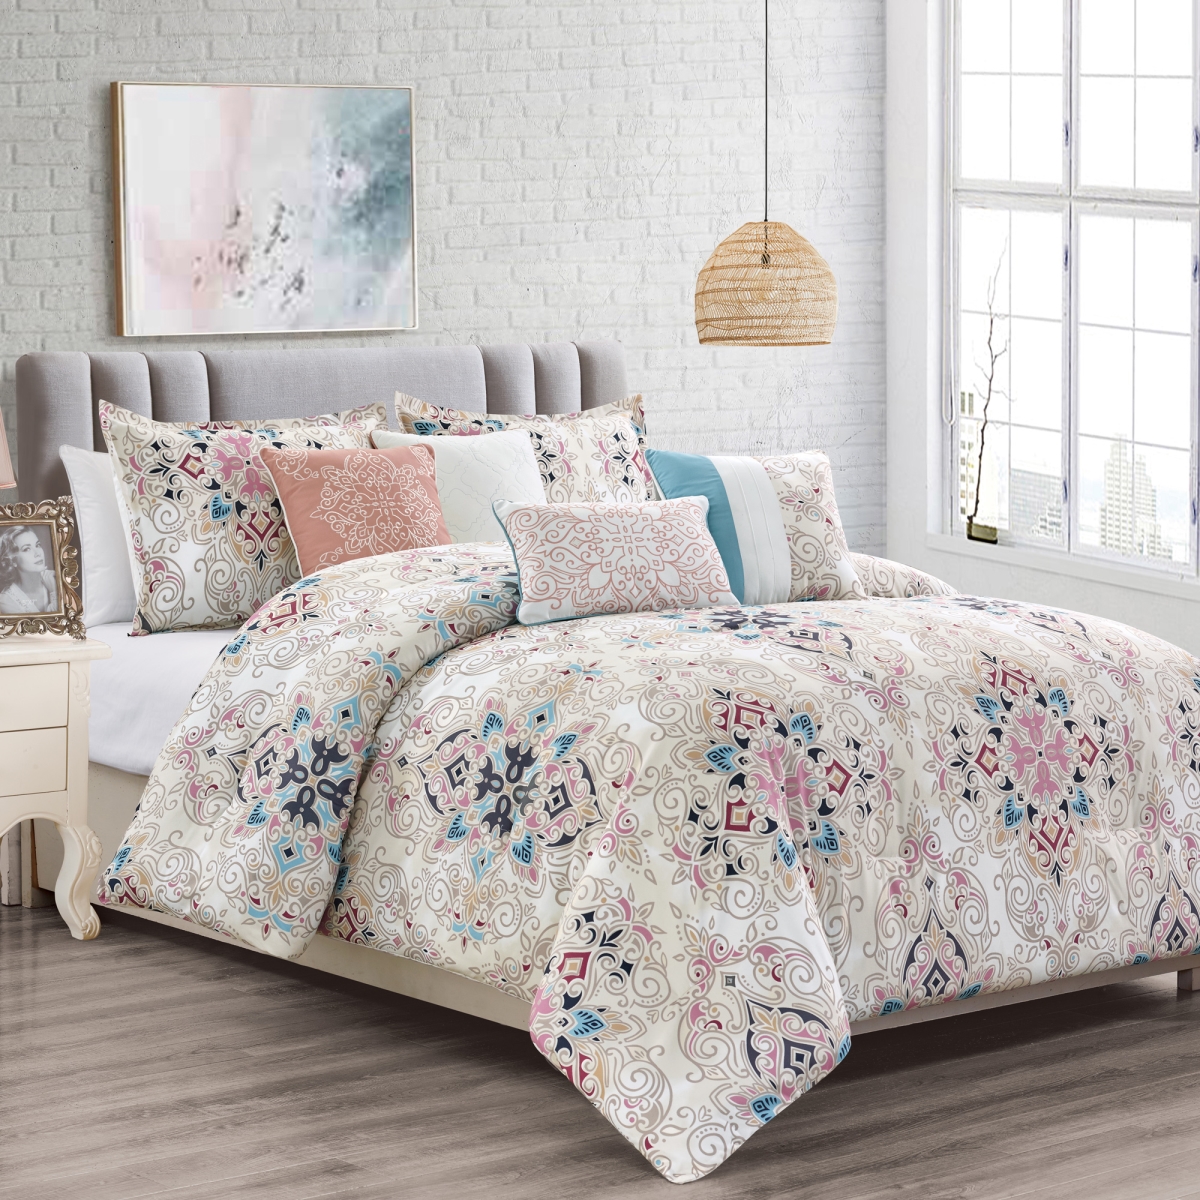 21787k Quiana Comforter Set, Multi Color - King Size - 7 Piece